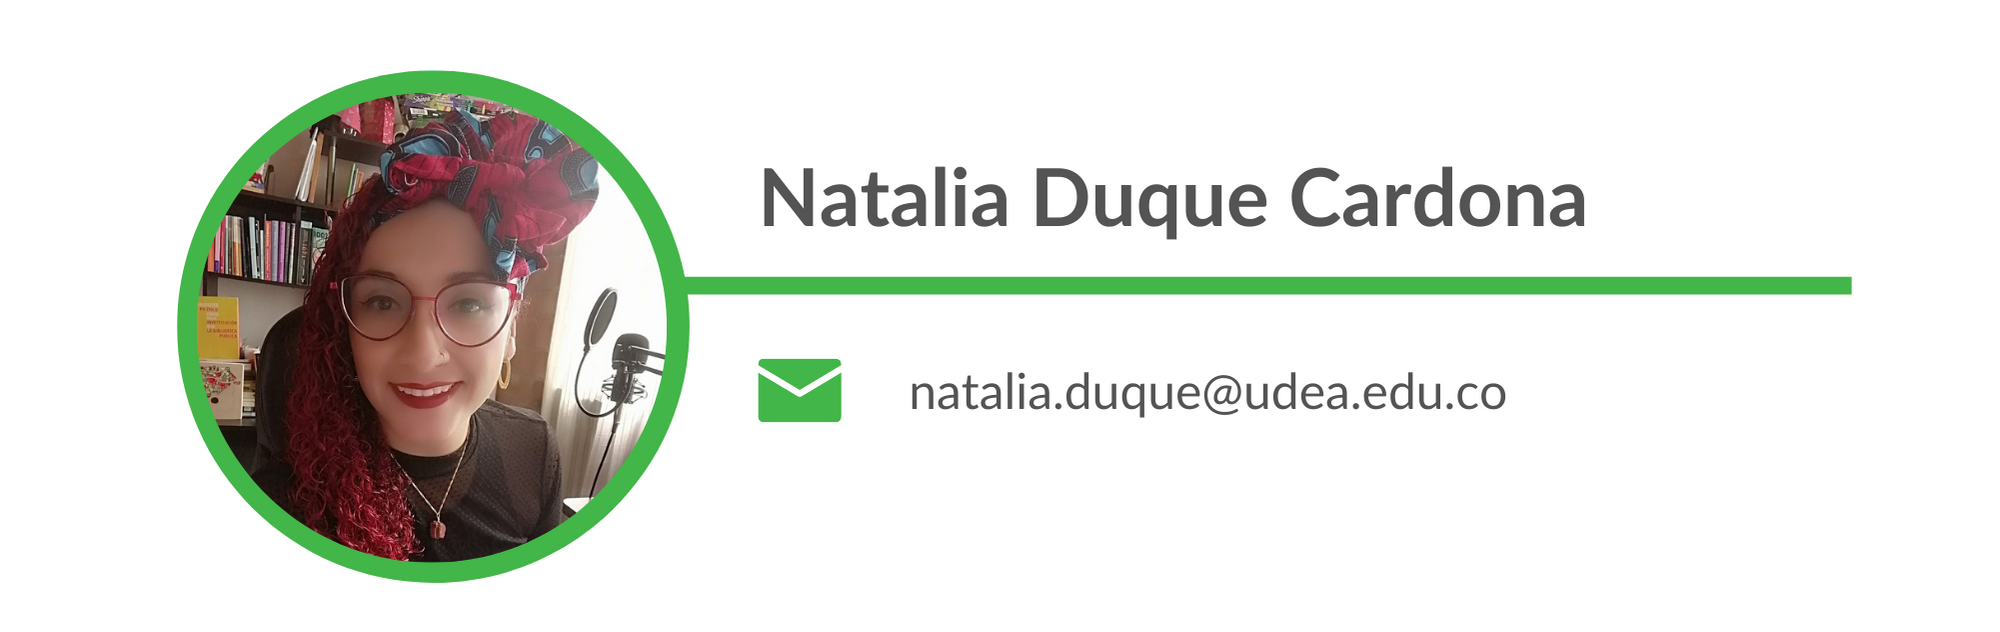 Natalia Duque Cardona | Email: natalia.duque@udea.edu.co